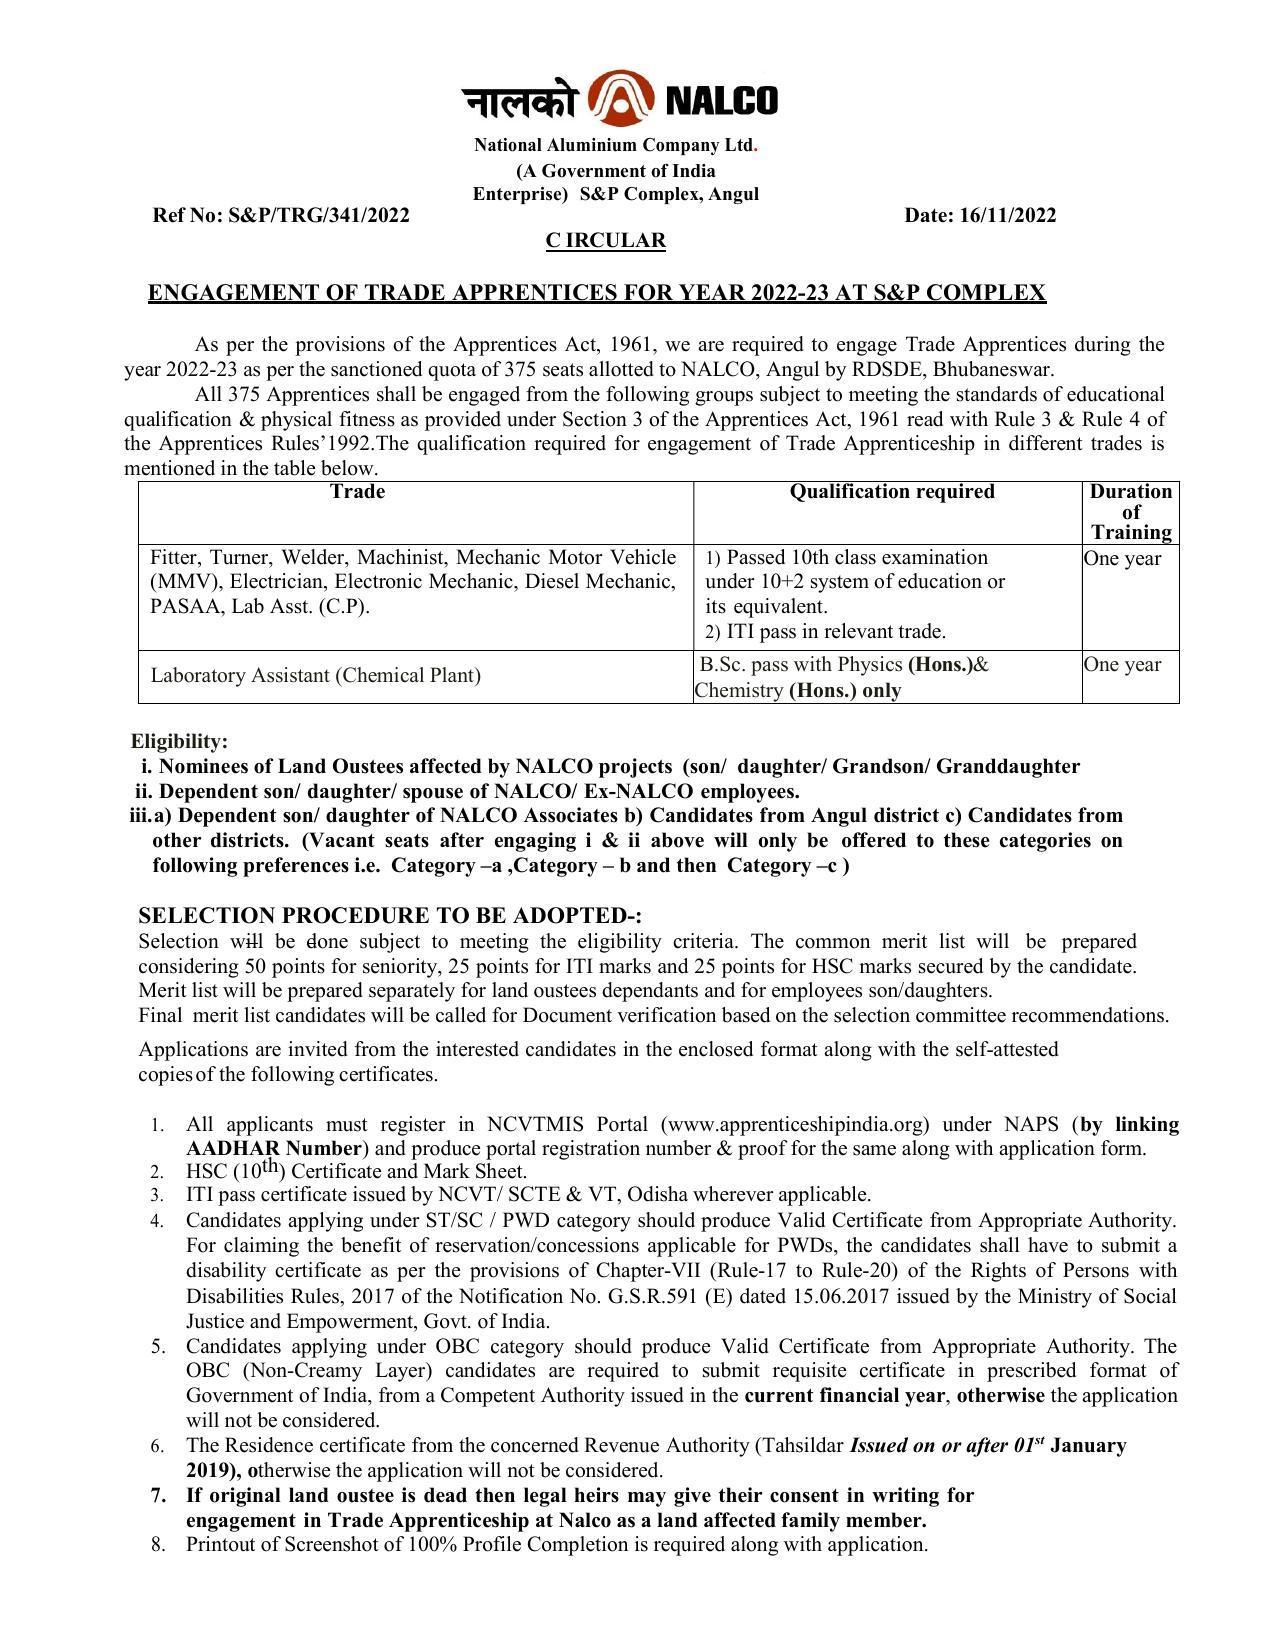 National Aluminium Company Limited (NALCO) Invites Application for Trade Apprentice Recruitment 2022 - Page 3